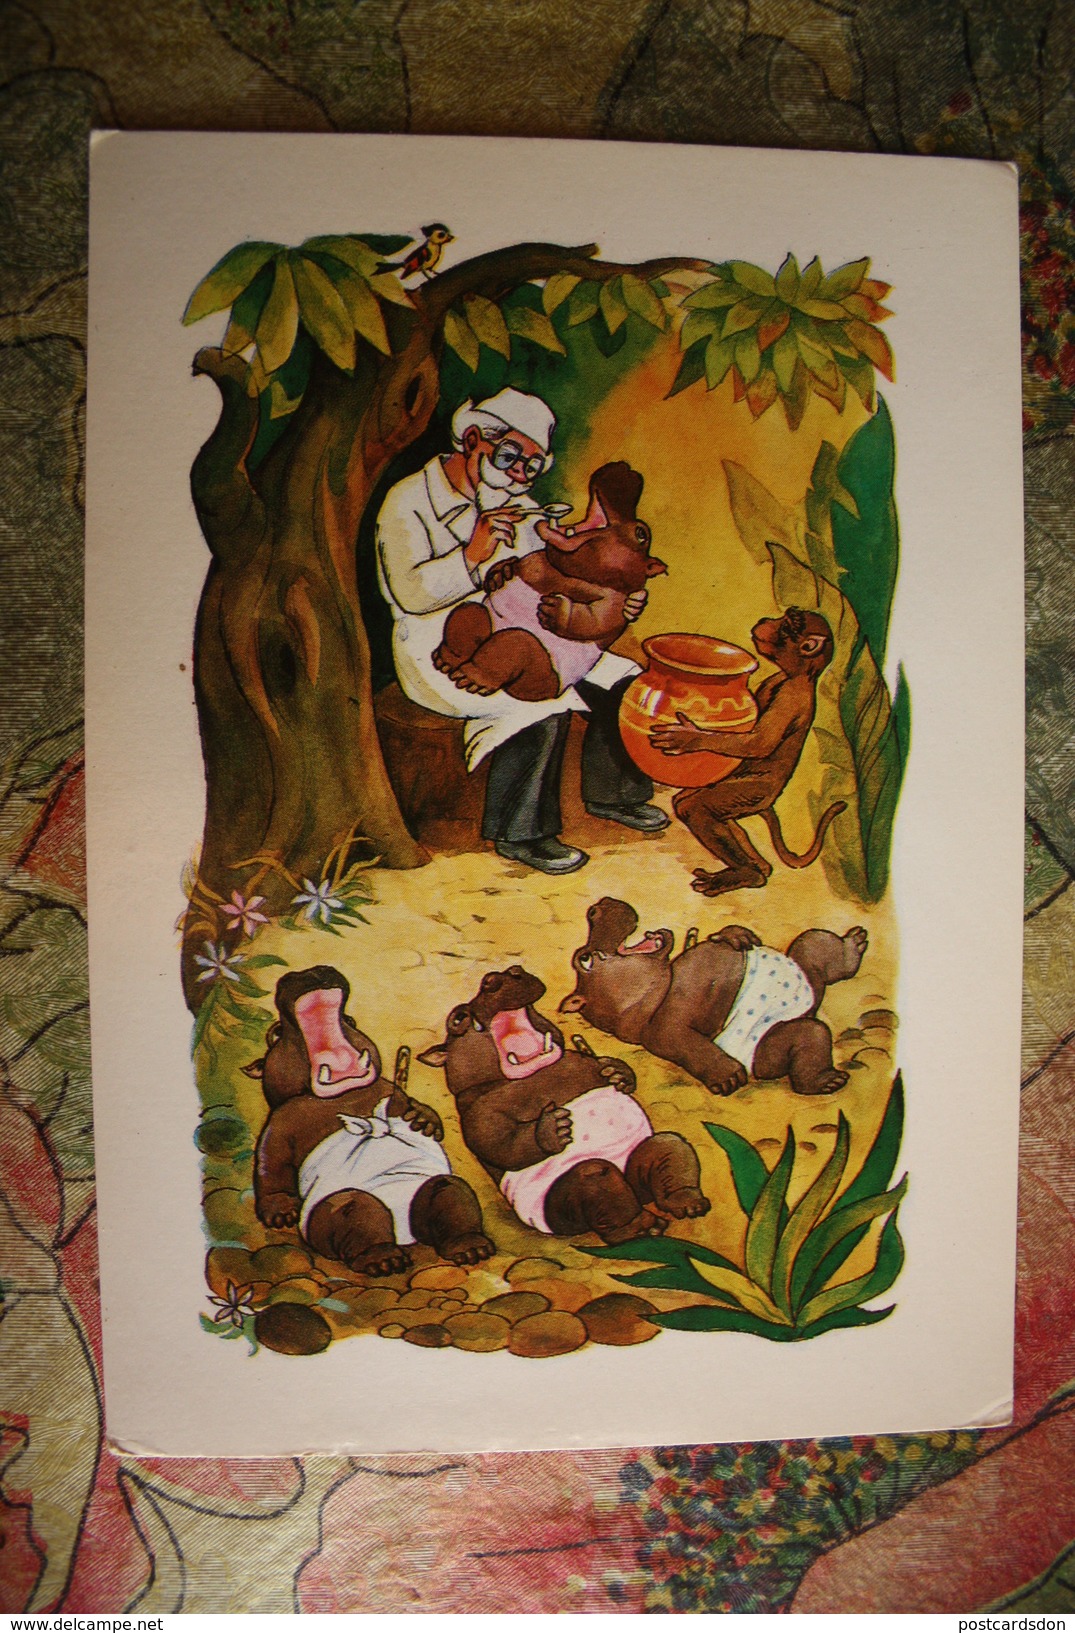 Old USSR Postcard. "Doctor Doolittle". Hippo. 1985 - Monkey - Hippopotamuses